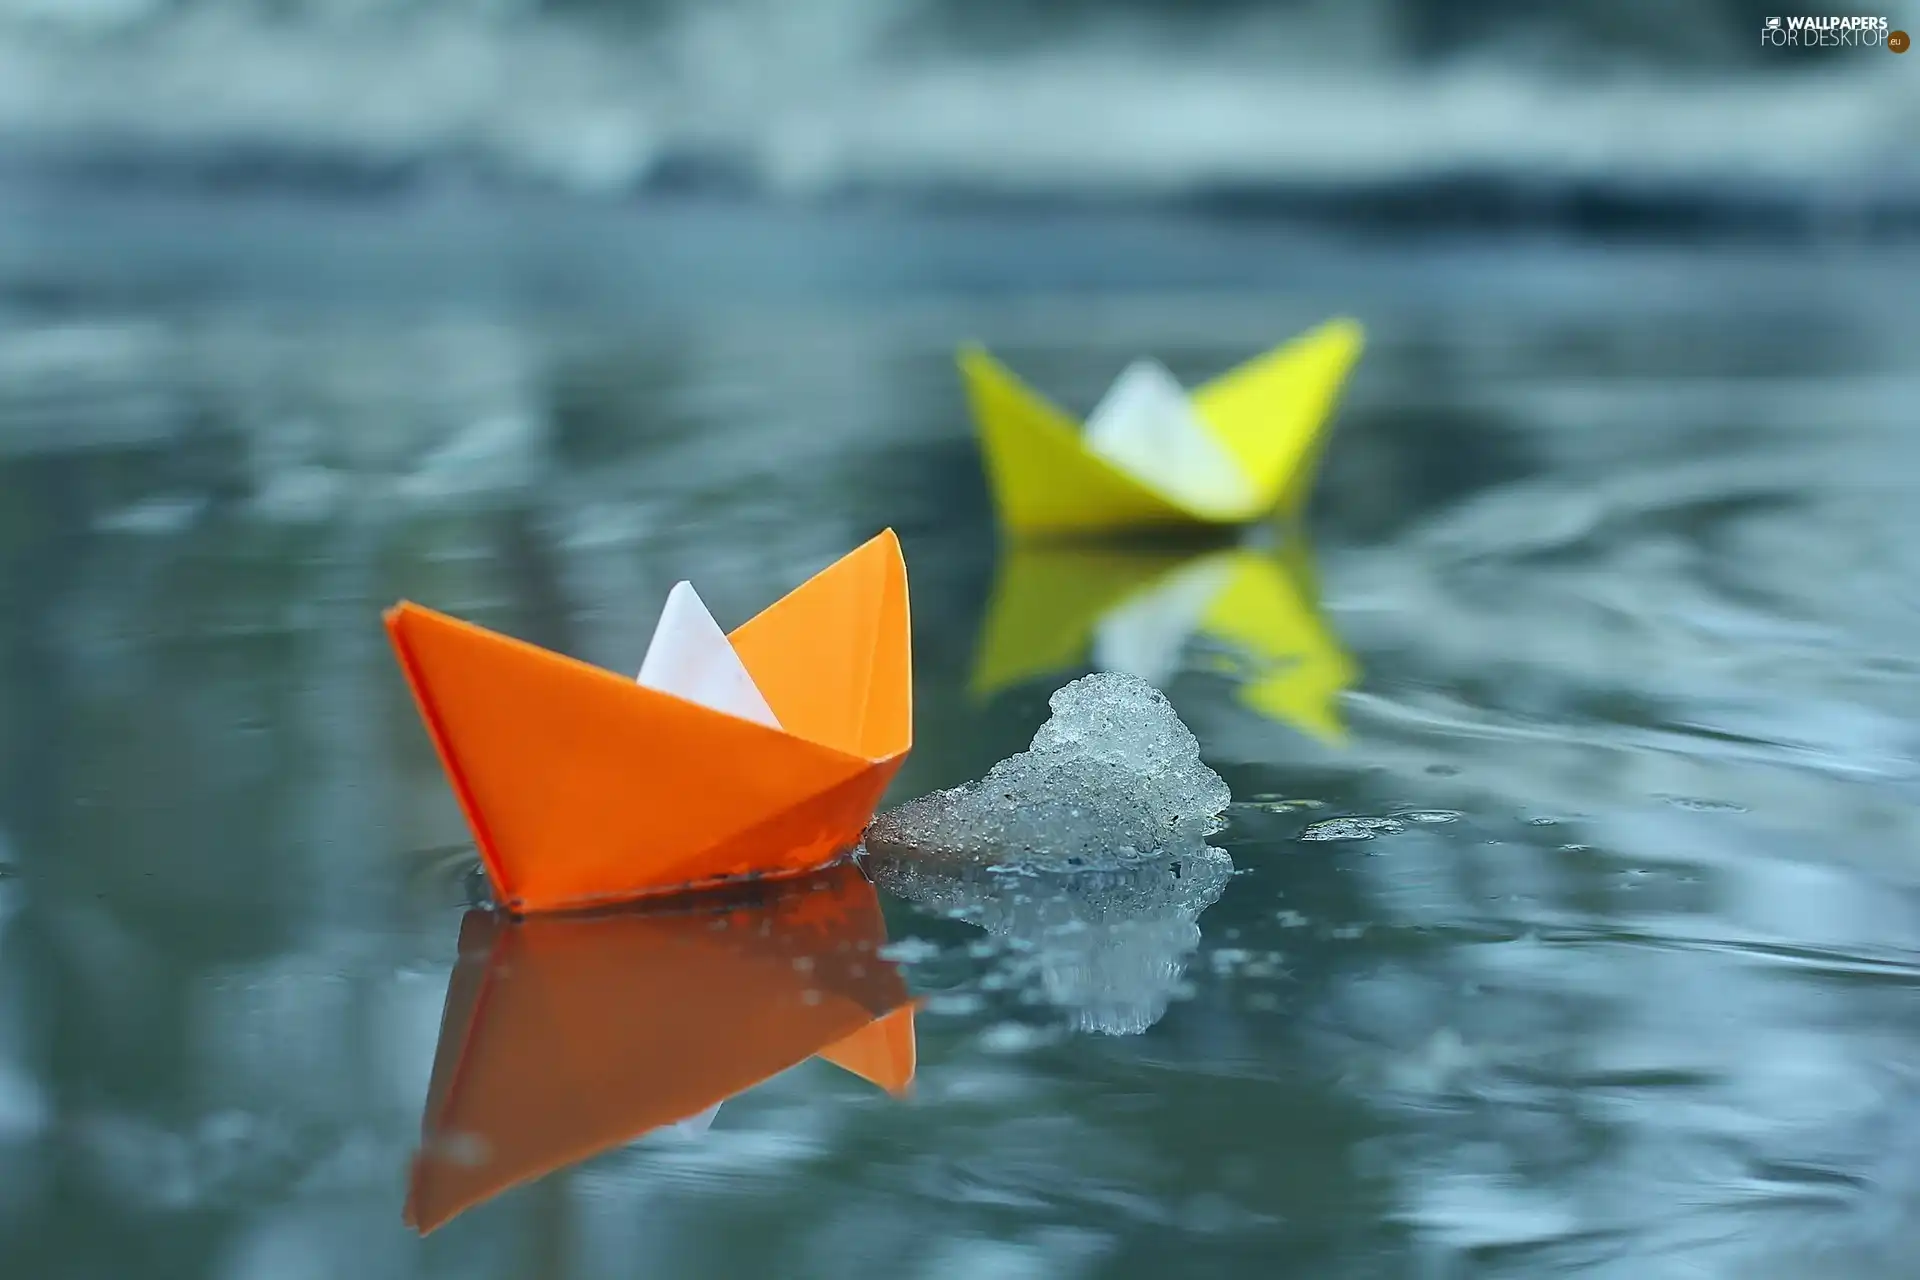 water, vessels, Origami